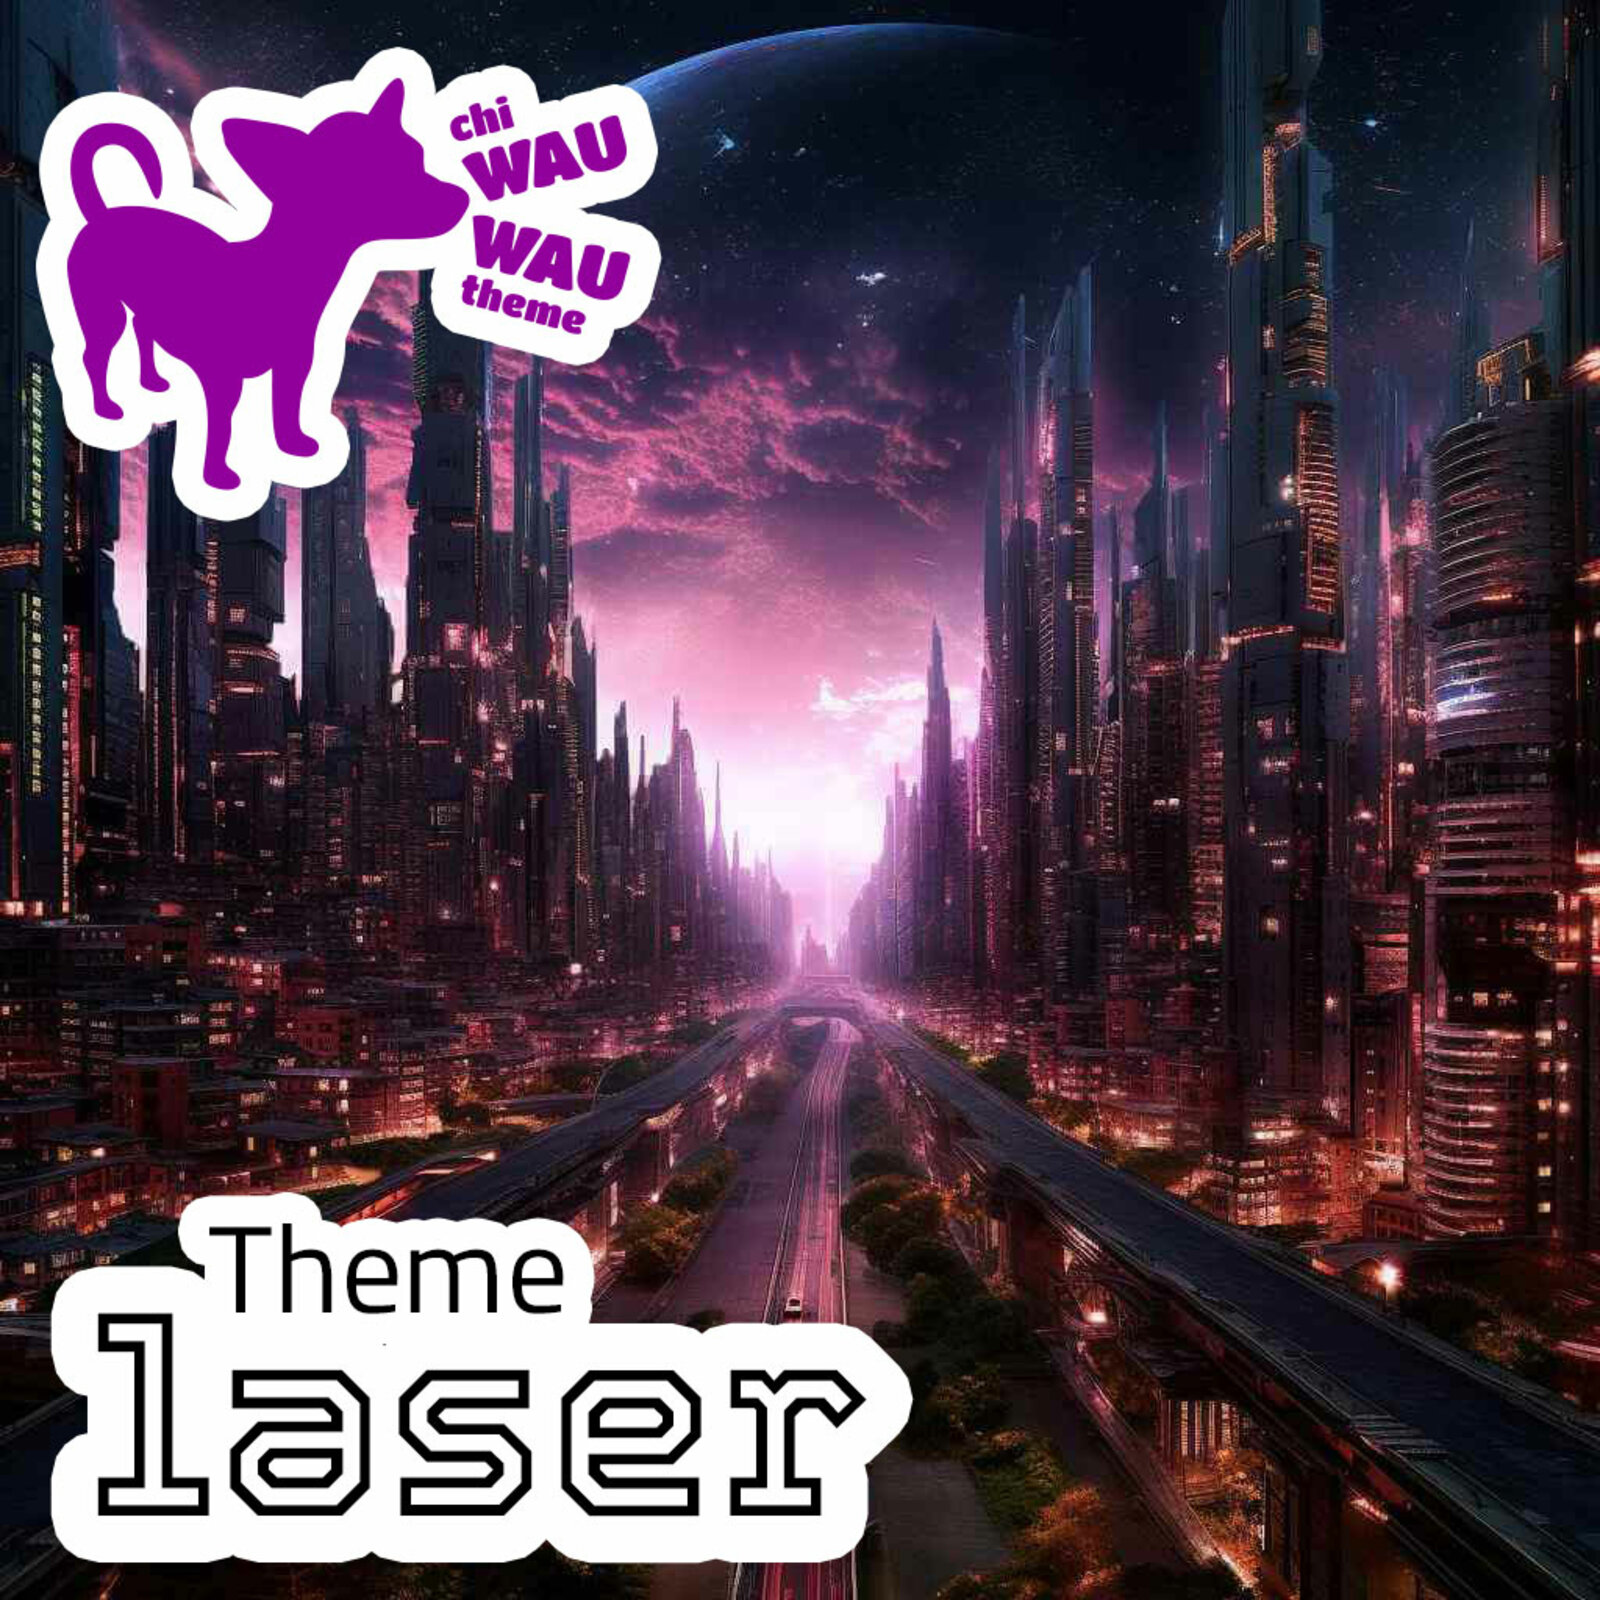 Theme laser